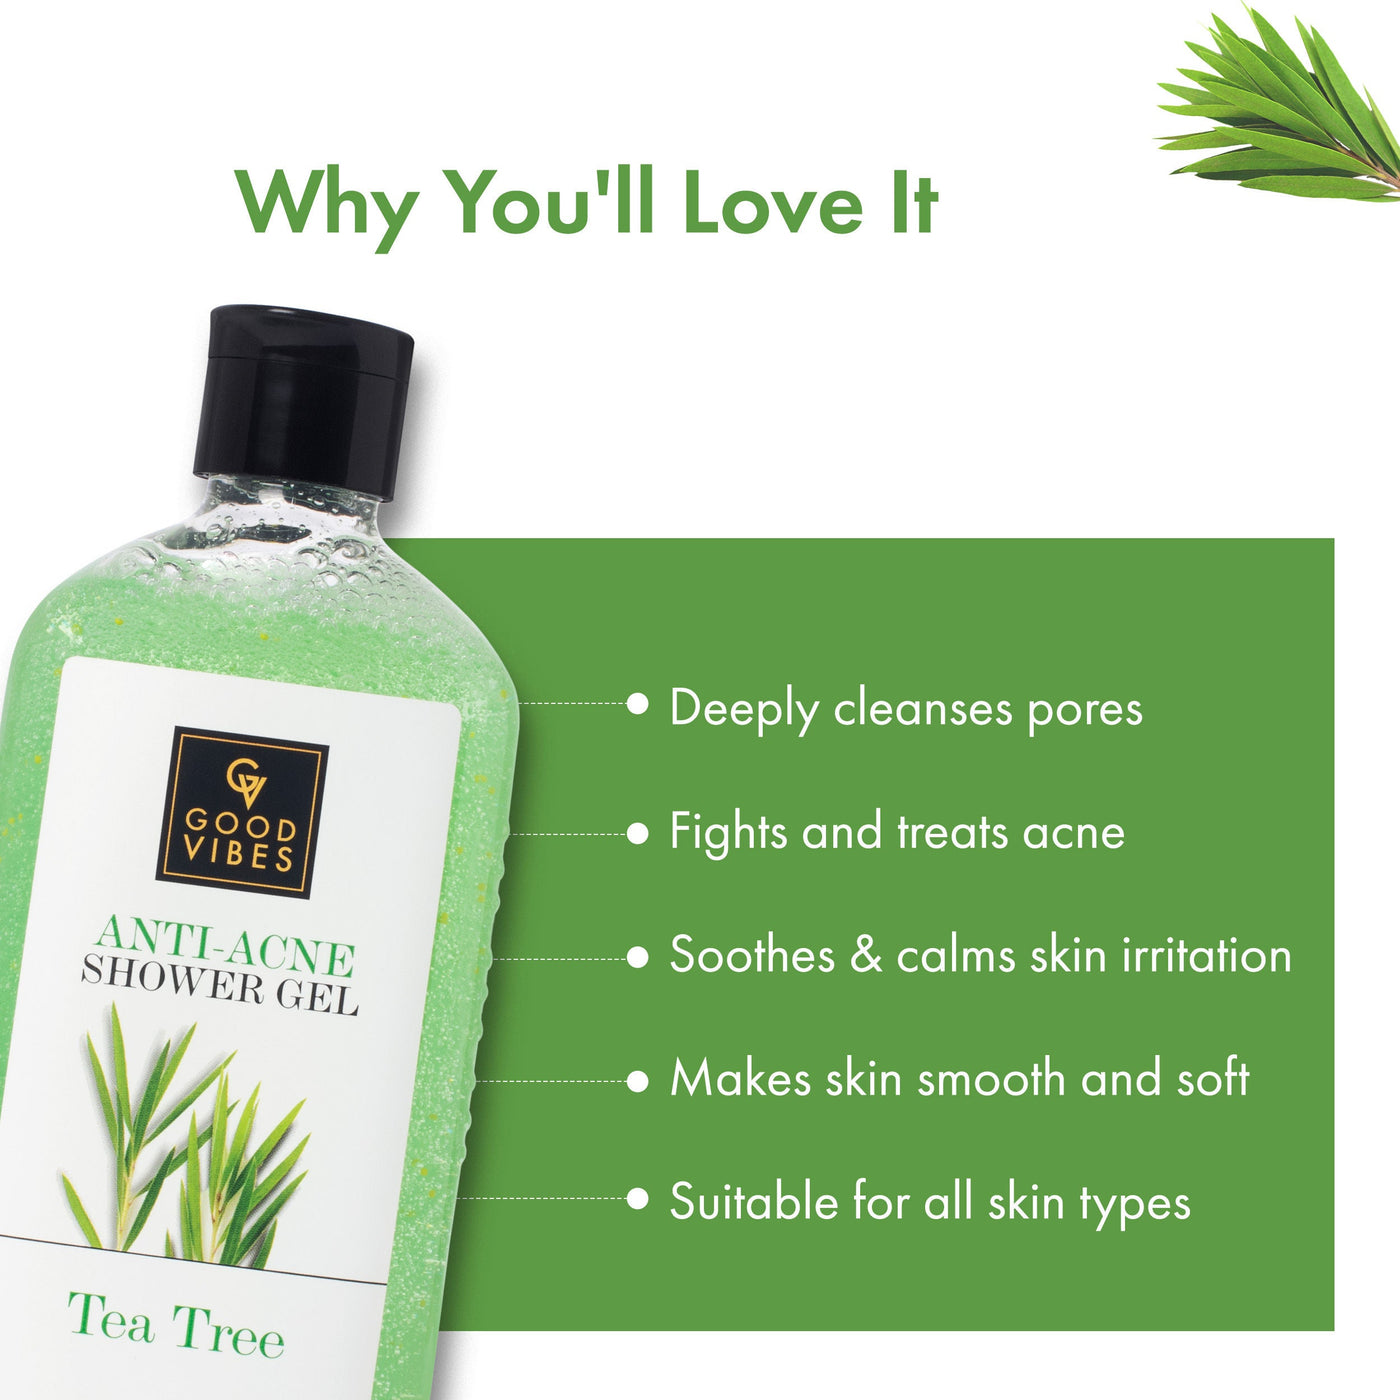 good-vibes-anti-acne-shower-gel-tea-tree-300-ml-3